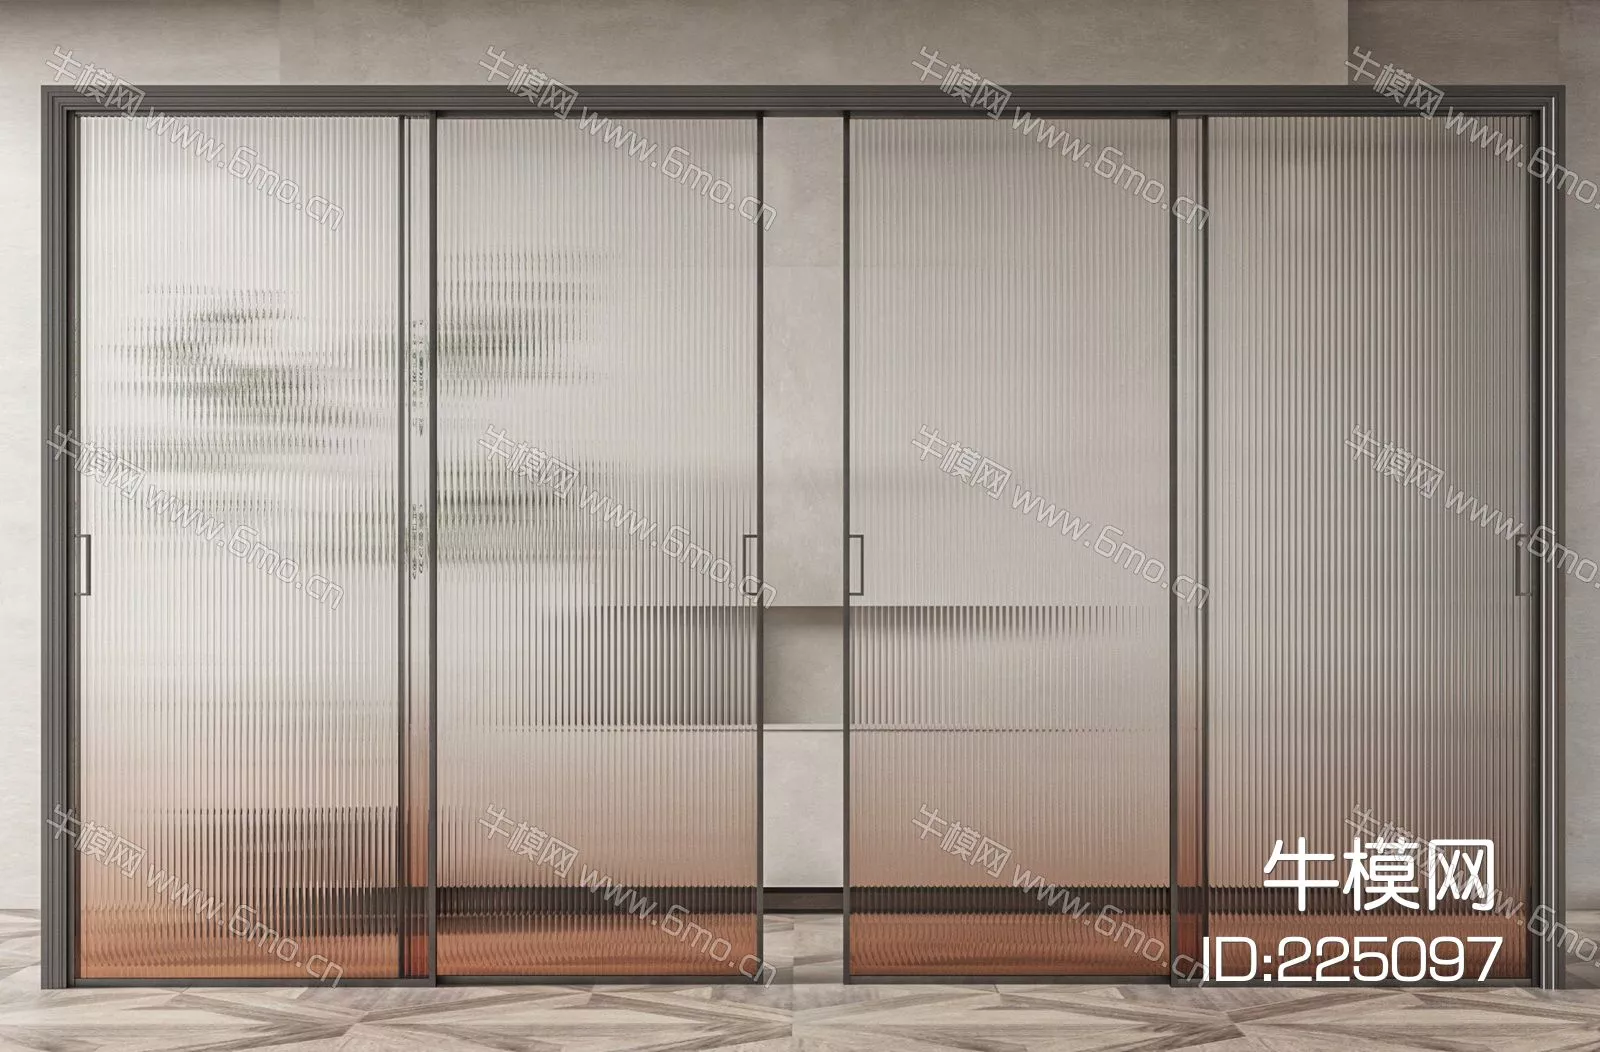 MODERN DOOR AND WINDOWS - SKETCHUP 3D MODEL - ENSCAPE - 225097